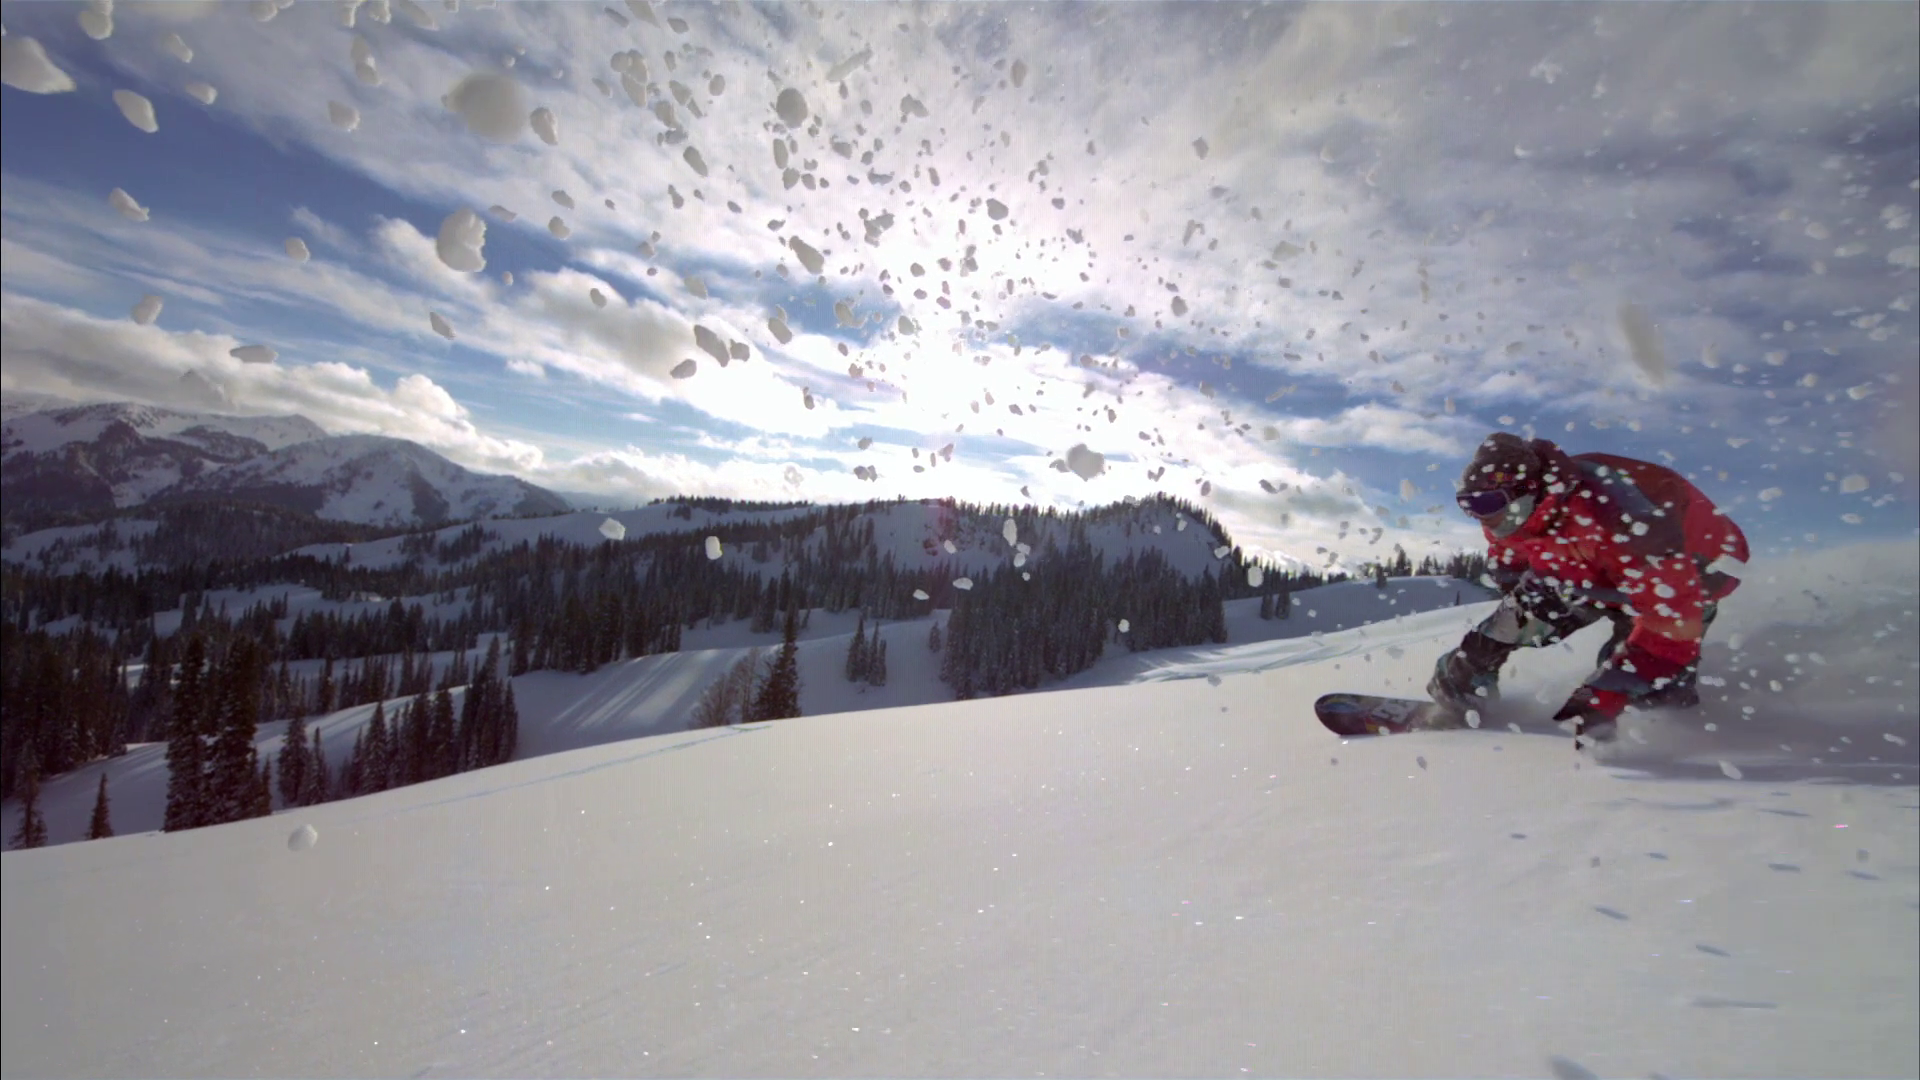 Powder Snowboarding Red Bull Style The Art Of Flight